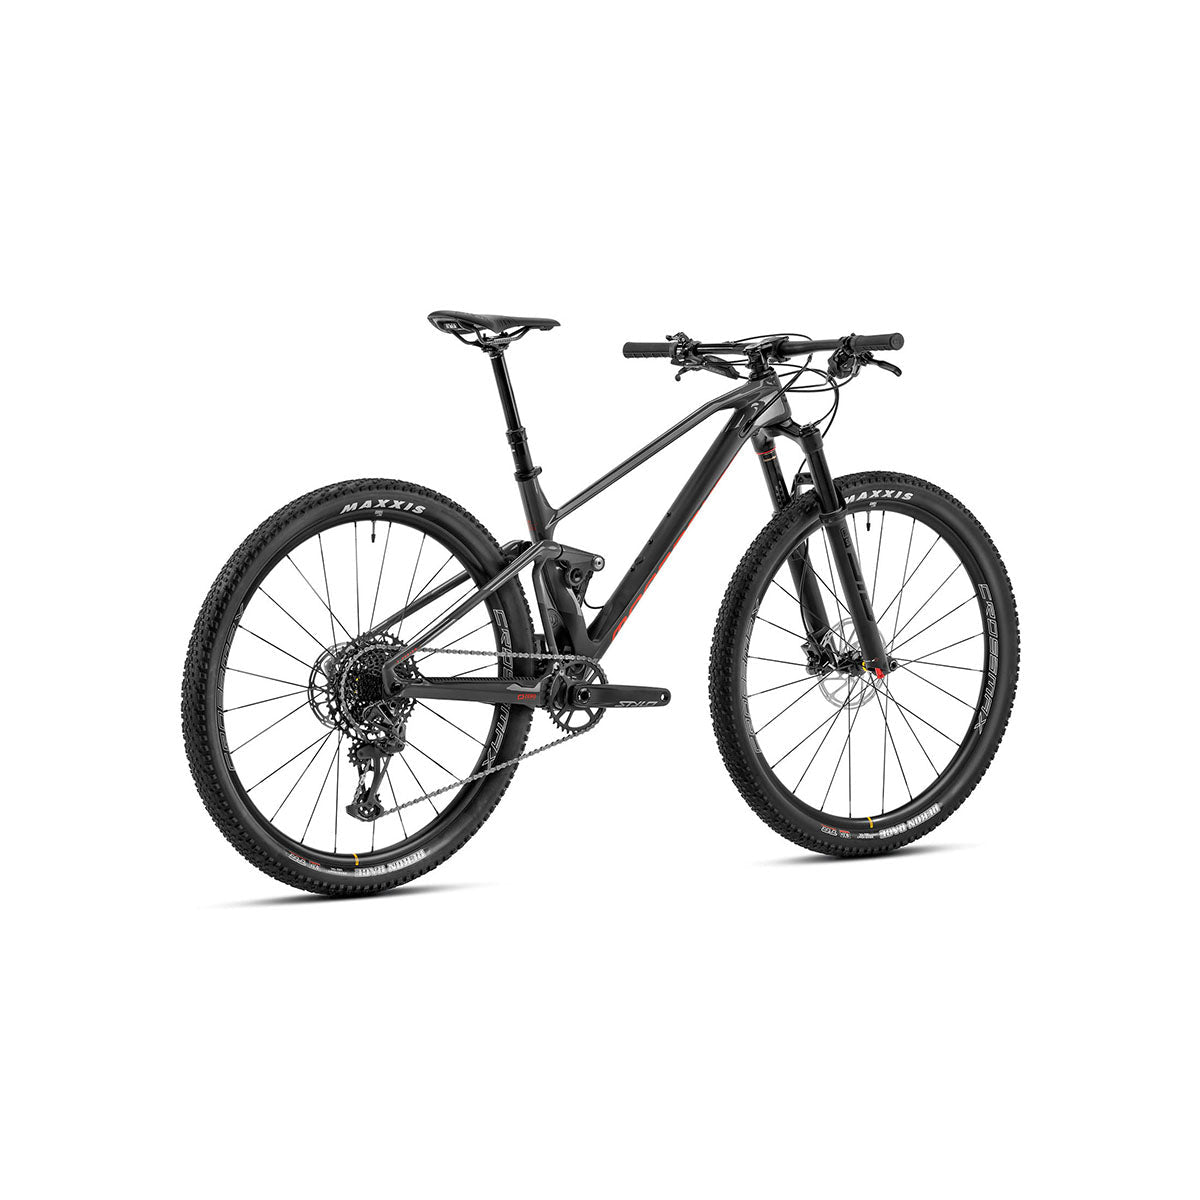 DEMO - Mondraker - F-PODIUM CARBON DC Bike - Gray/Carbon/Red - Medium (XC RACE)